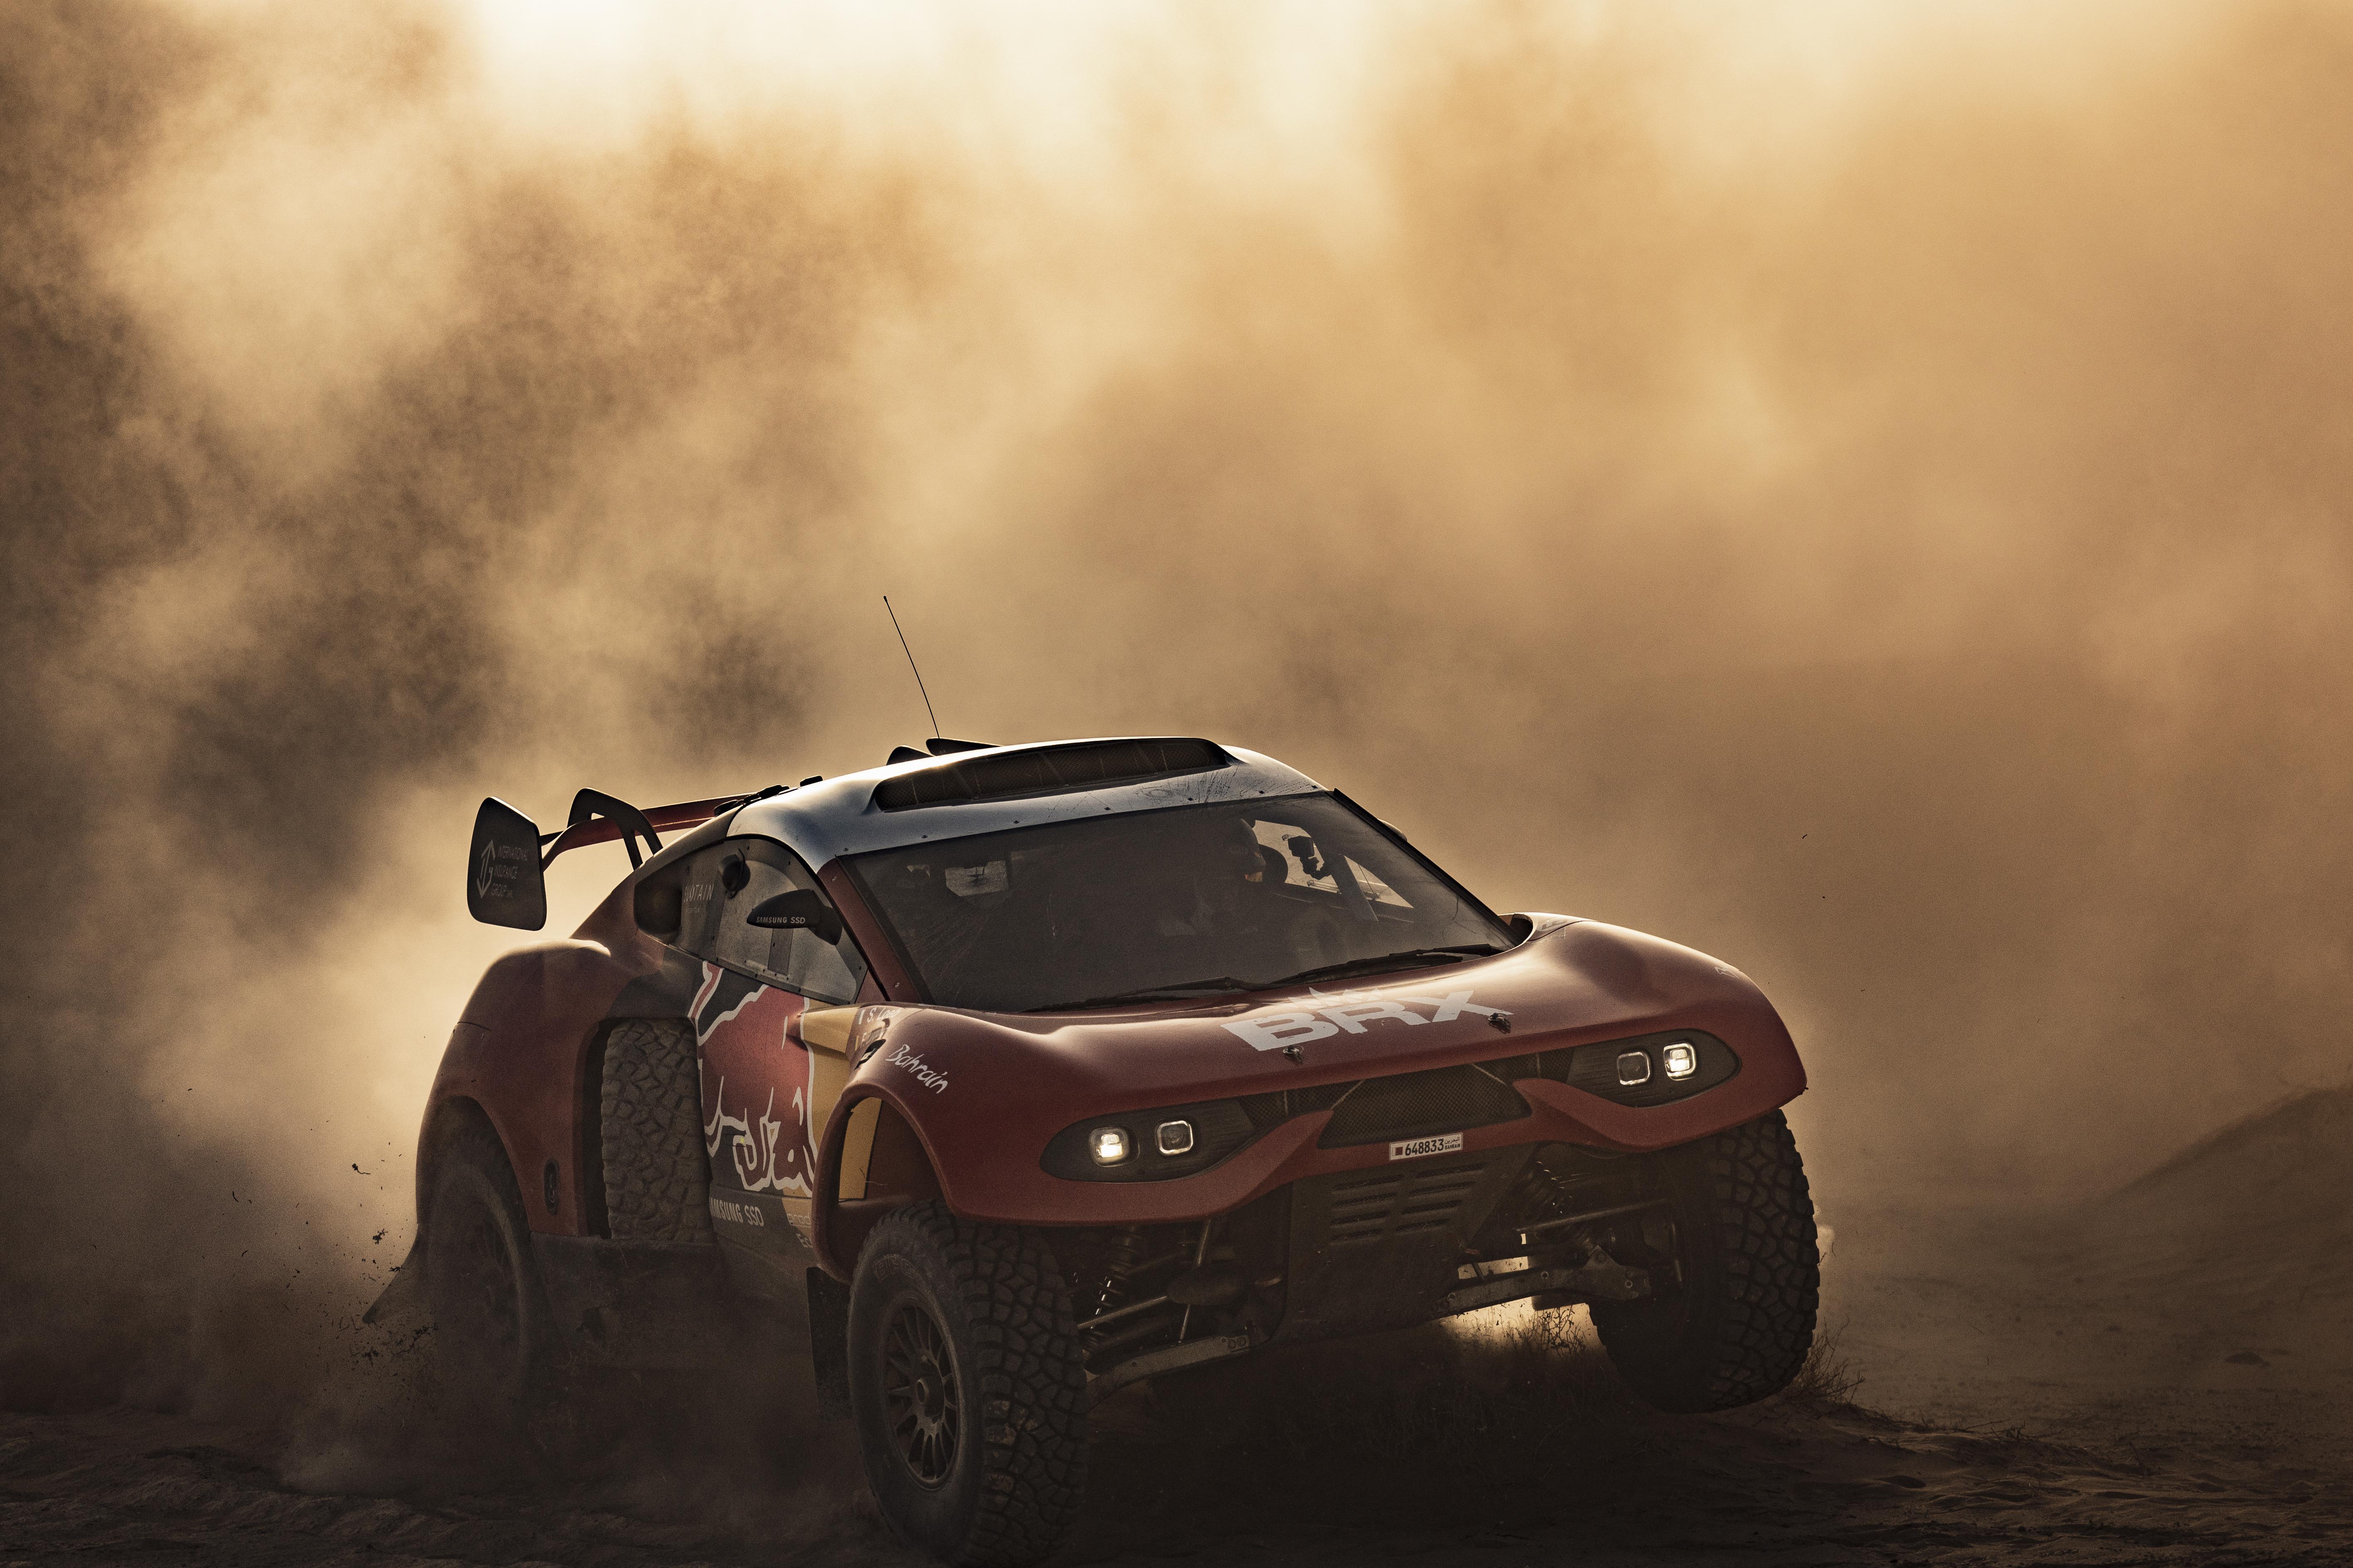 Dakar Rally A Mile Off Road Adventure Of Lifetime